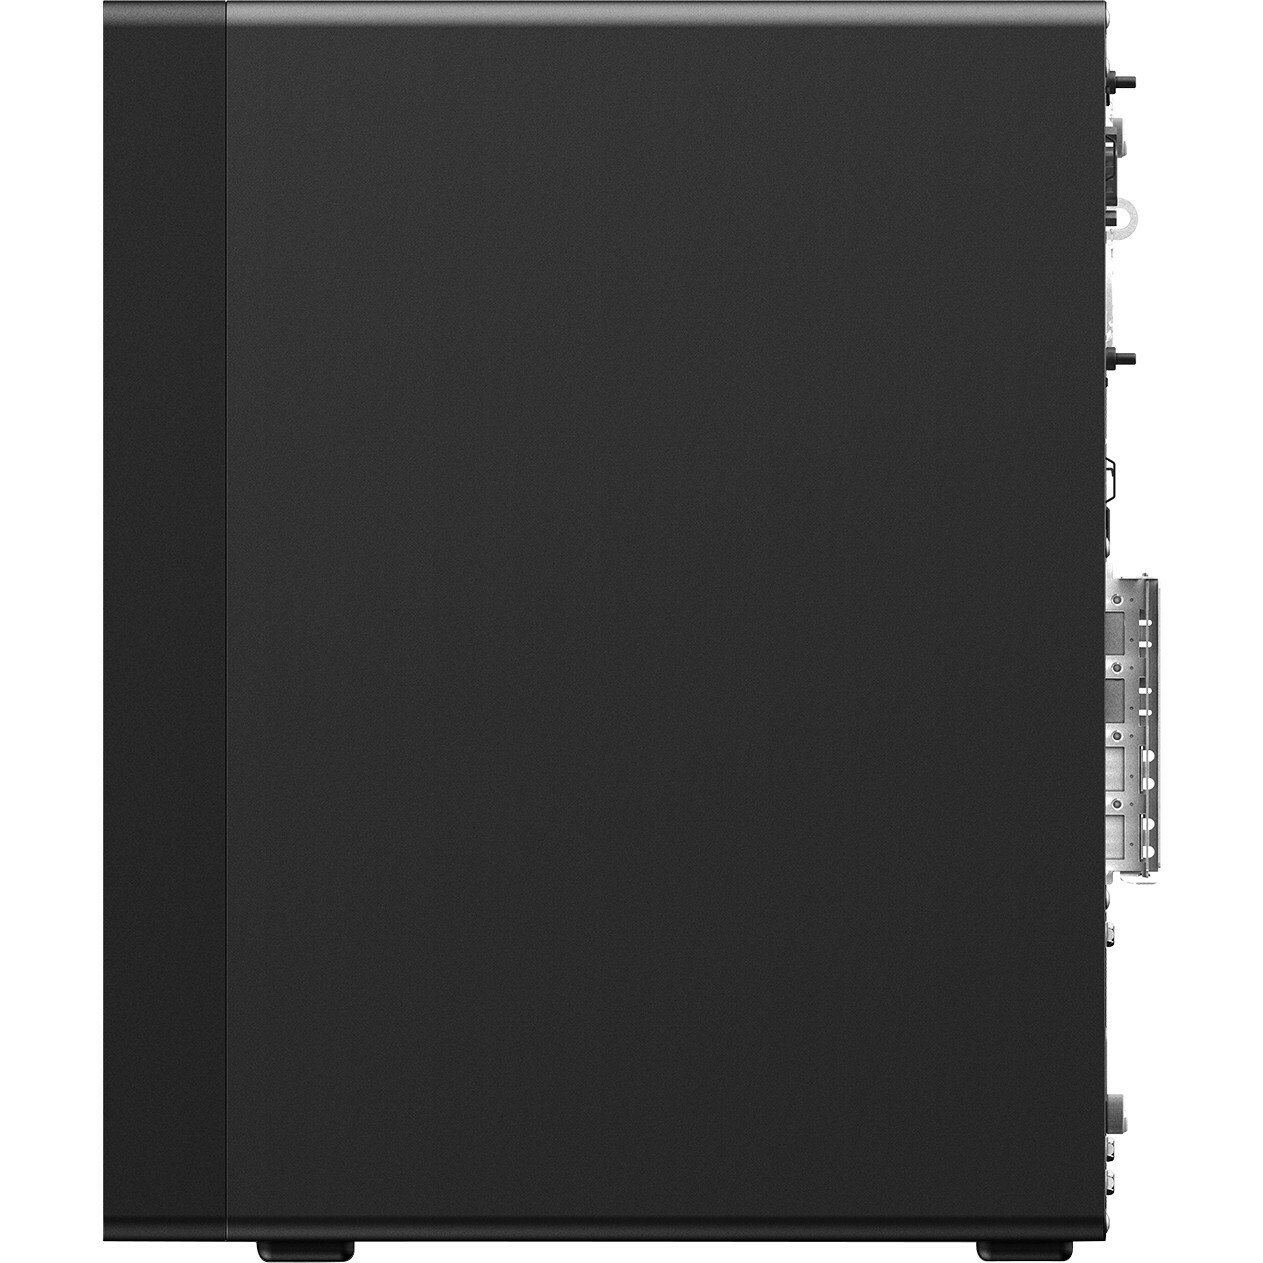 Lenovo ThinkStation P360 30FM001AUS Workstation - 1 x Intel Core i7 12th Gen i7-12700K - 16 GB - 512 GB SSD - Tower